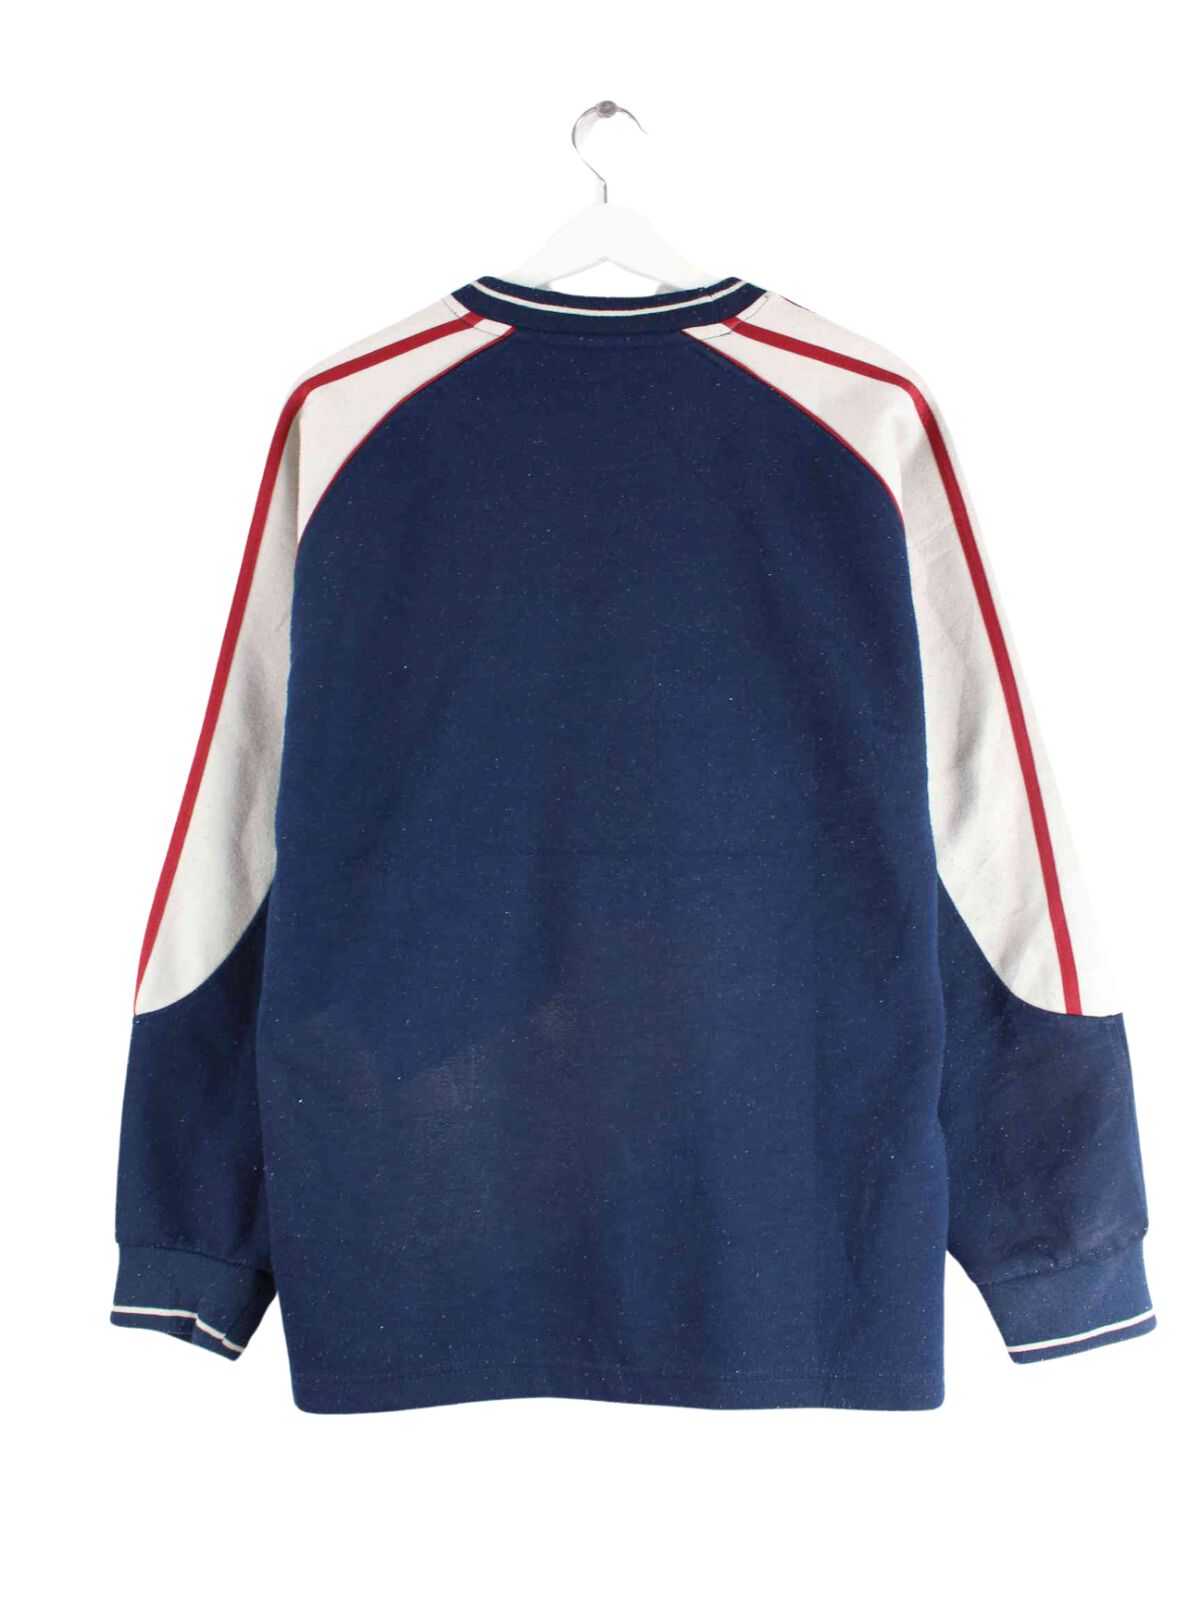 Adidas 90s Vintage Performace Sweater Blau M (back image)